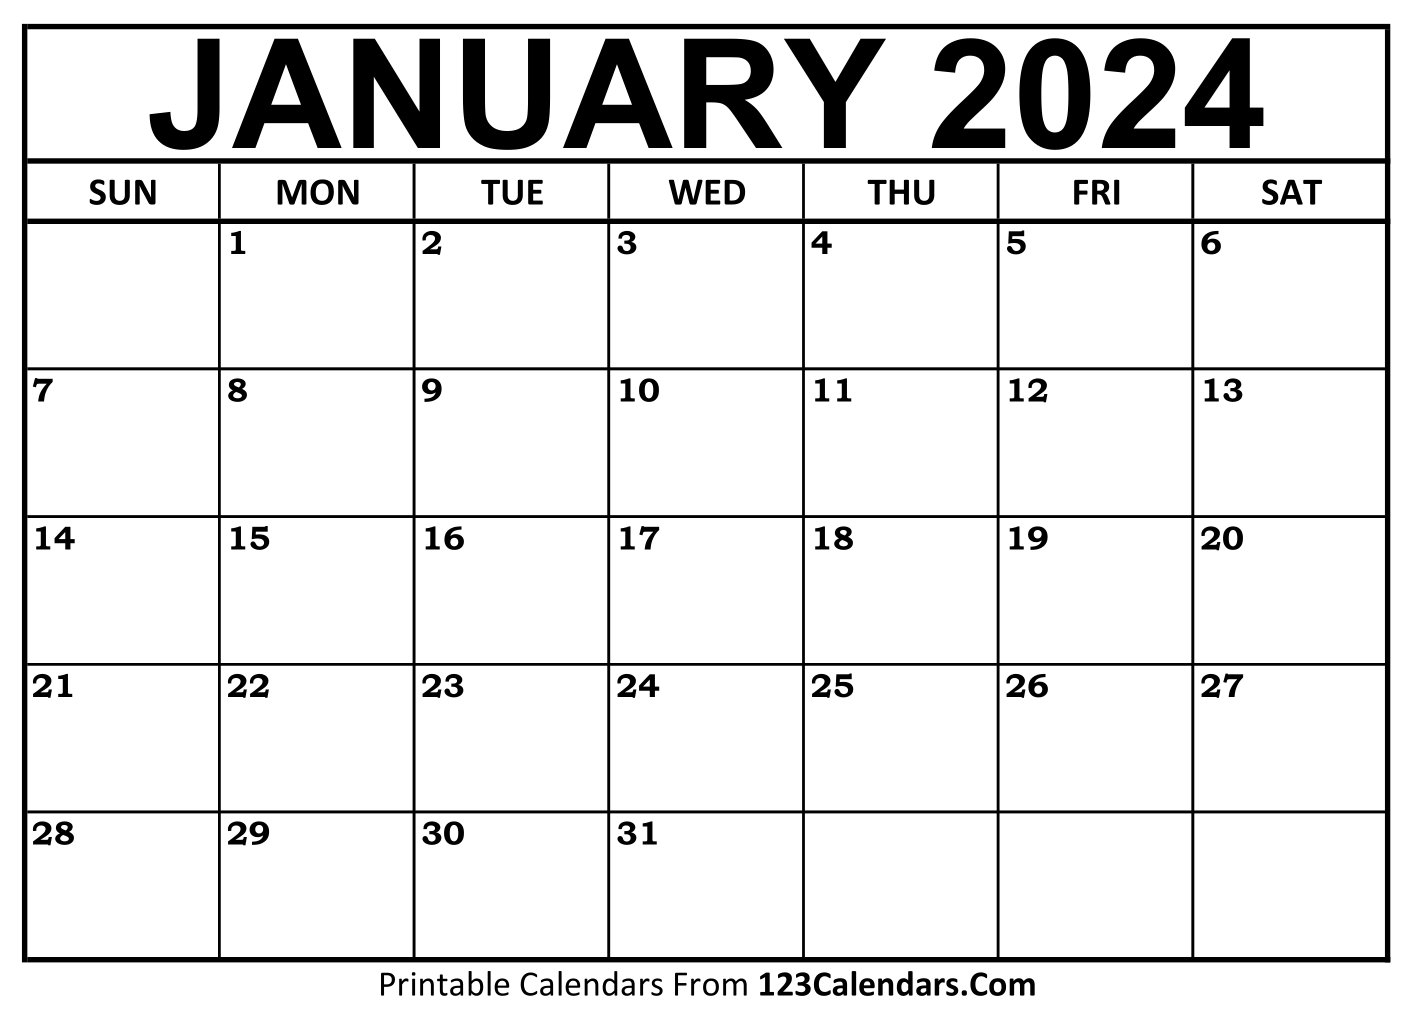 Printable January 2024 Calendar Templates - 123Calendars for Free Calendar Printable January 2024